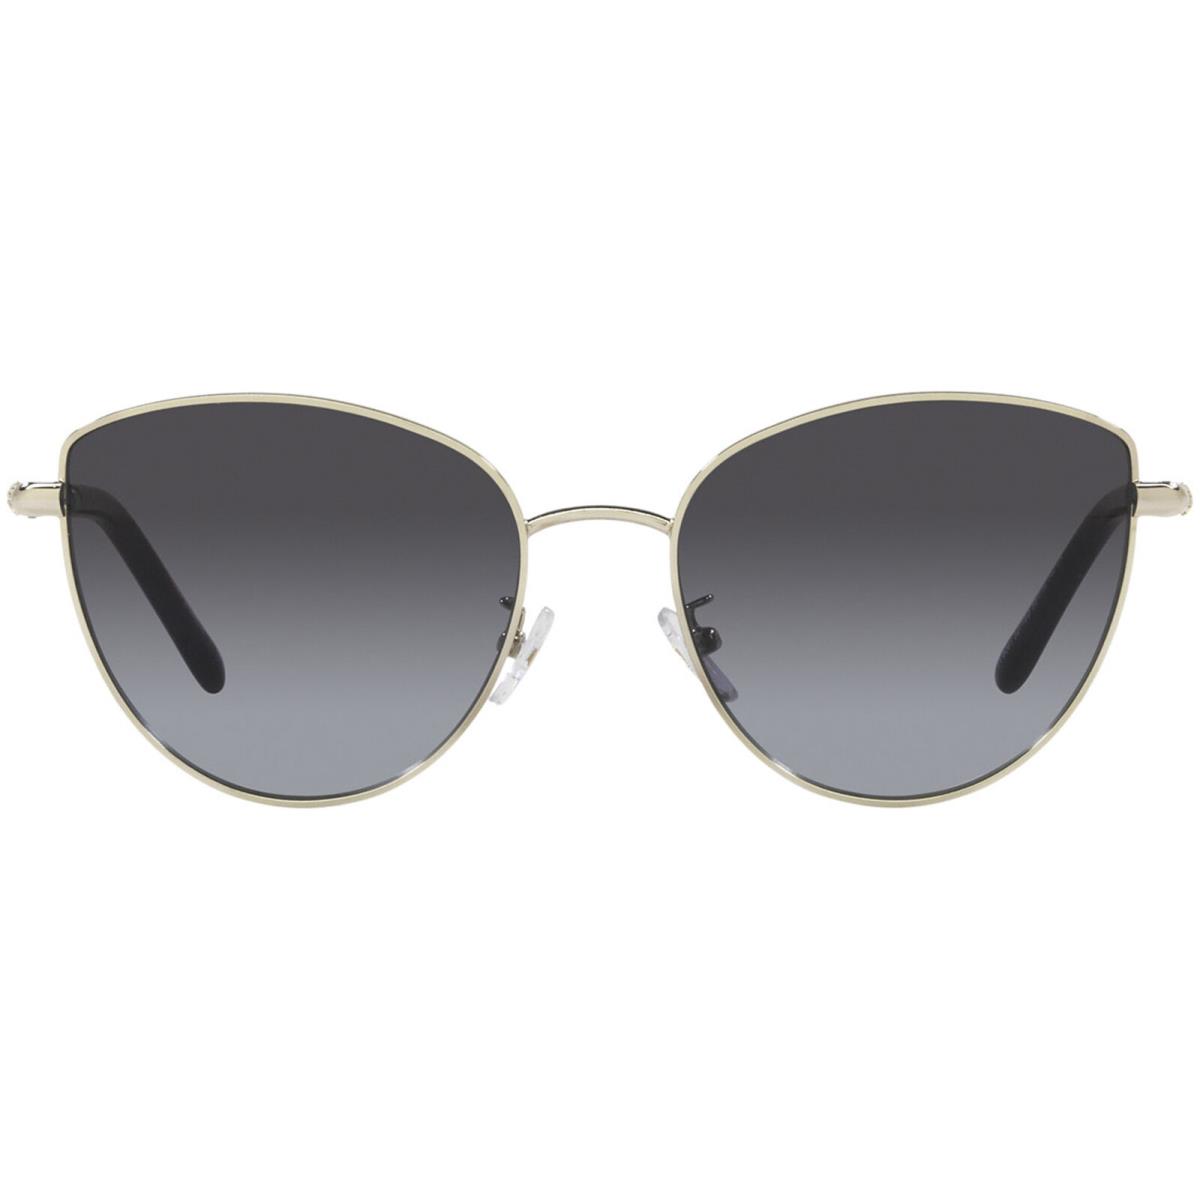 Tory Burch Women`s Shiny Light Gold-tone Cat Eye Sunglasses - TY6091-32718G-56